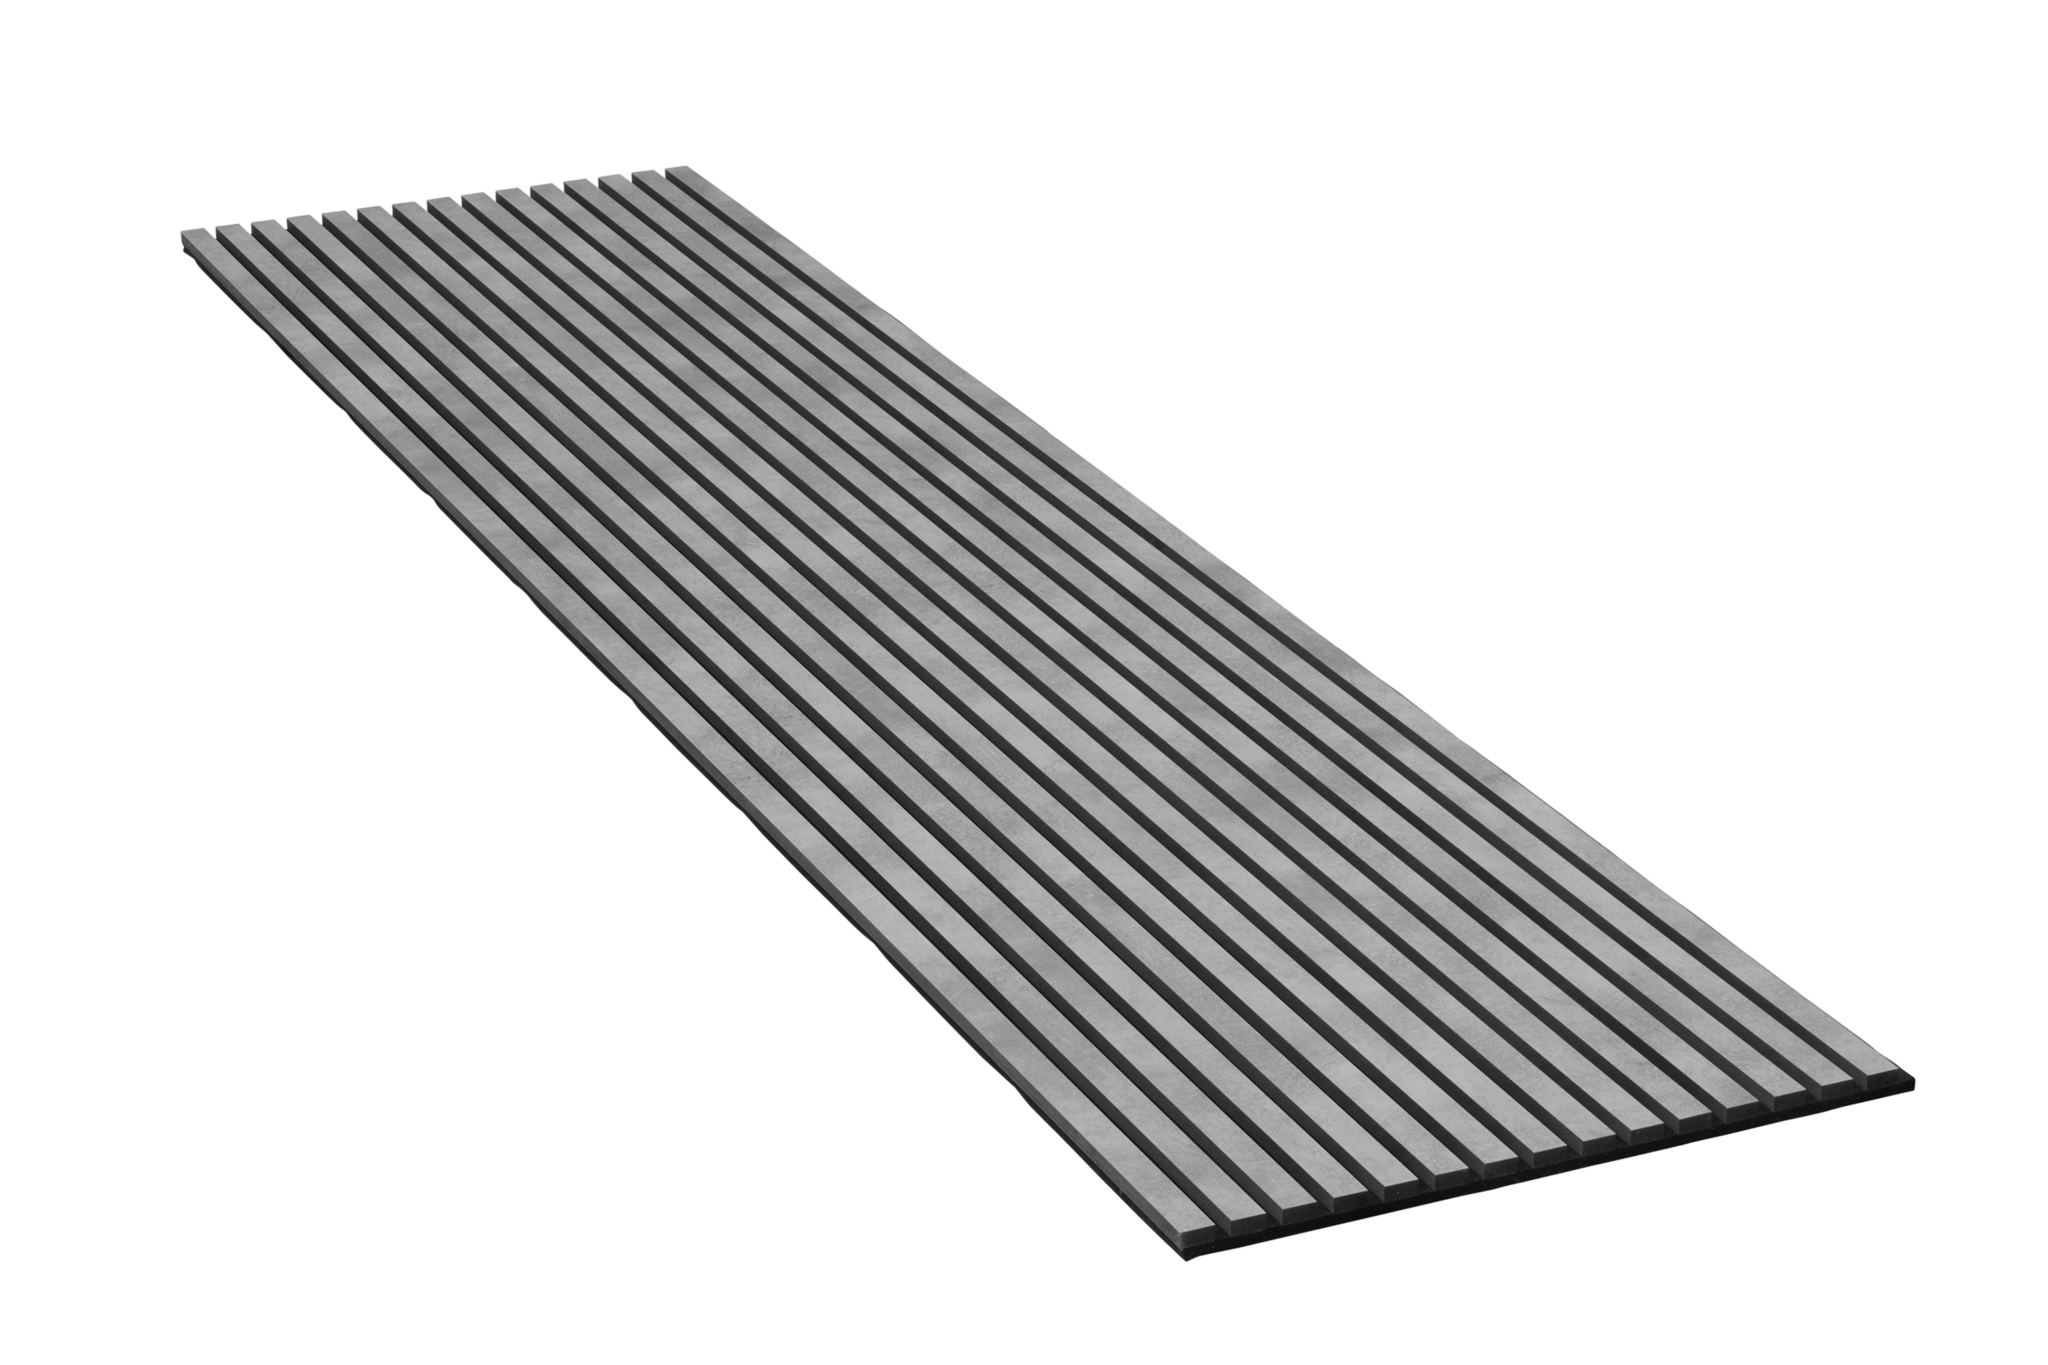 Panel decorativo Sticks (Roble gris, 2,5 m x 3,45 cm x 9 mm, 4 ud.)